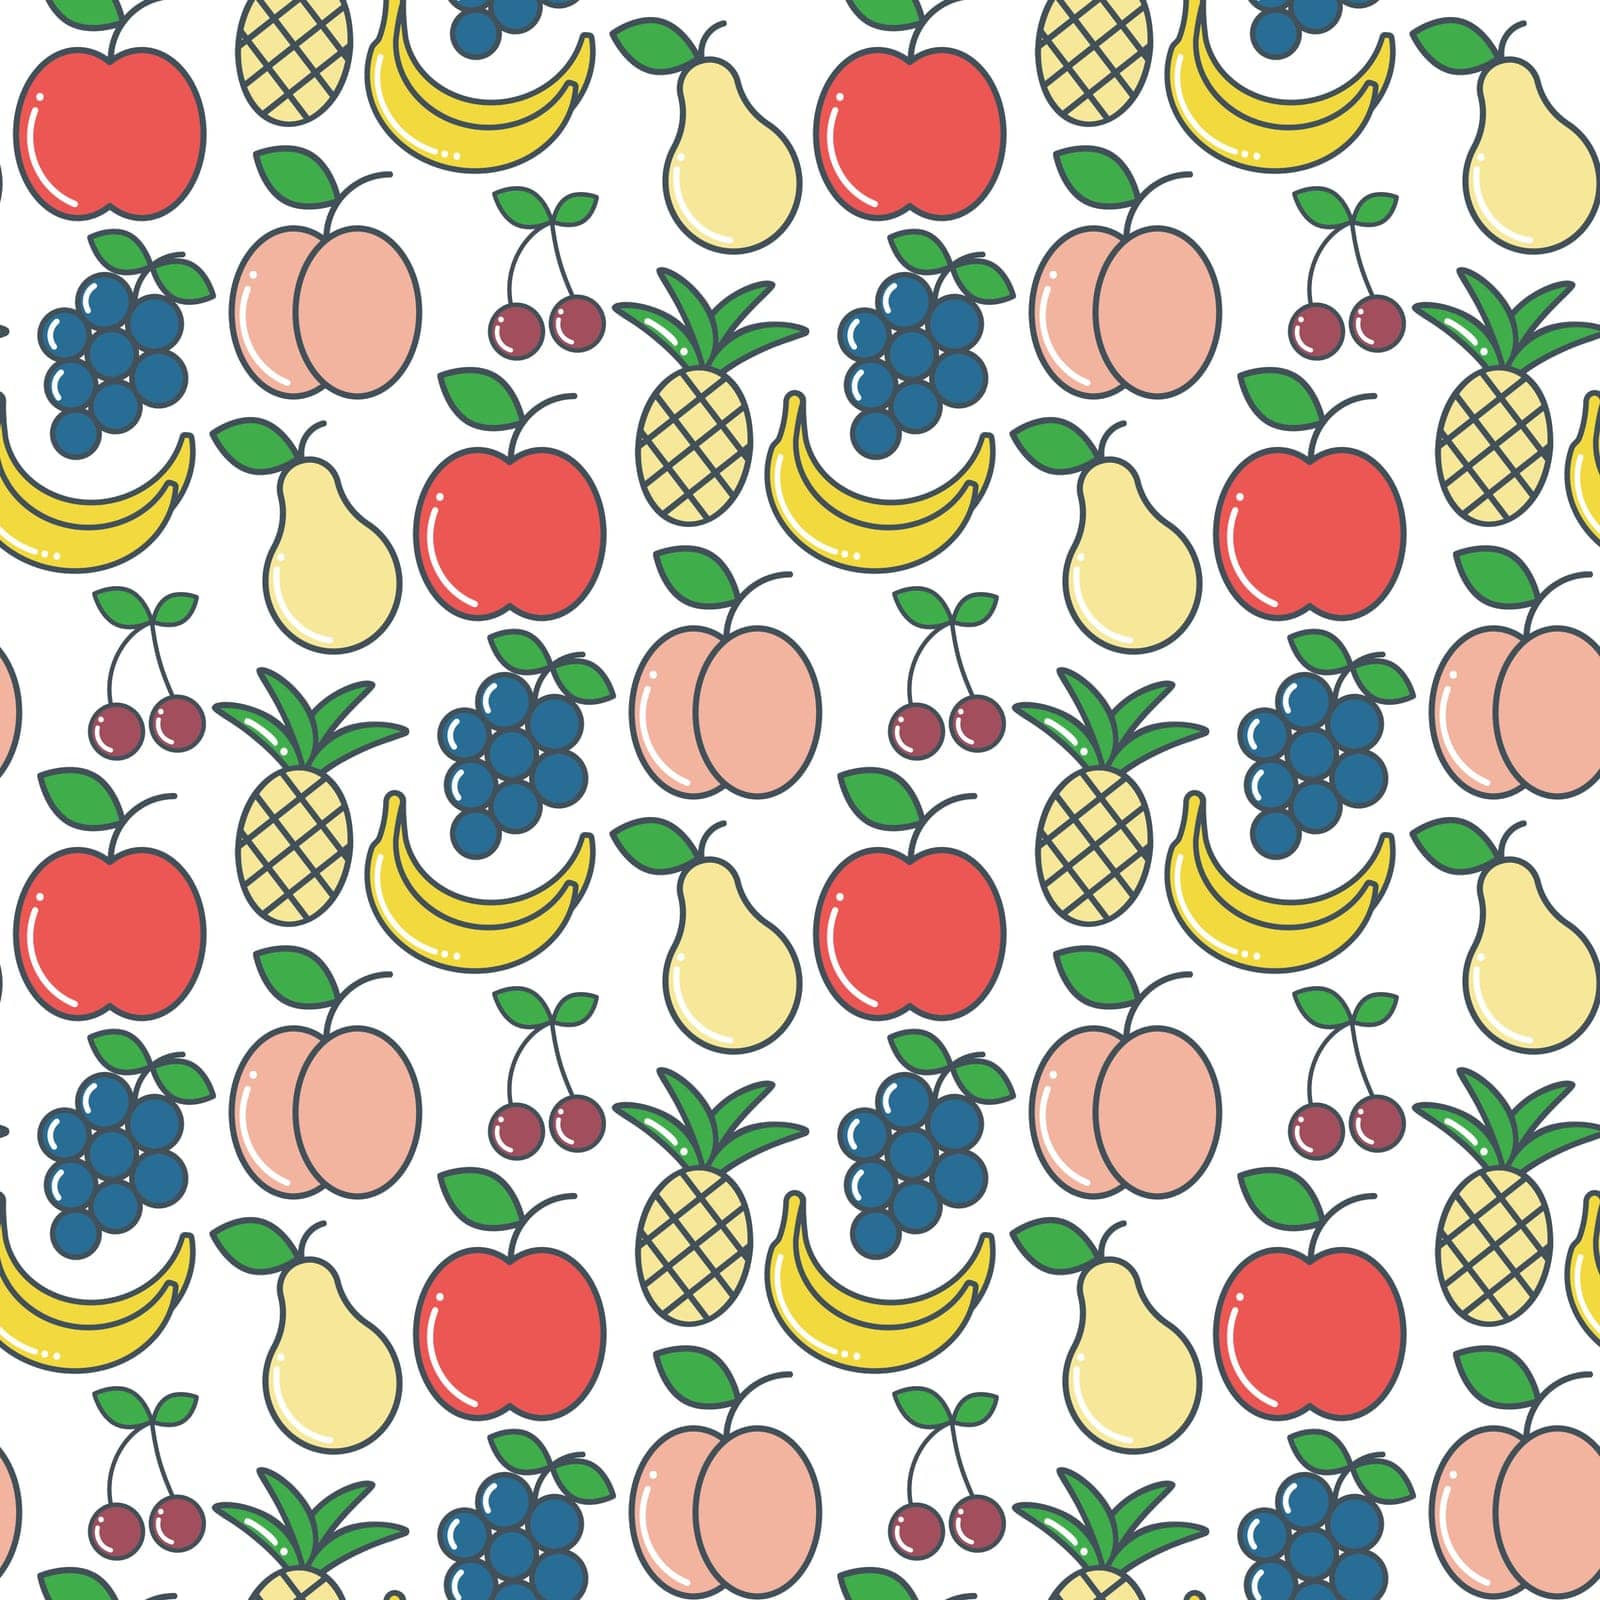 Tropical fruit background, vector illustration by TassiaK